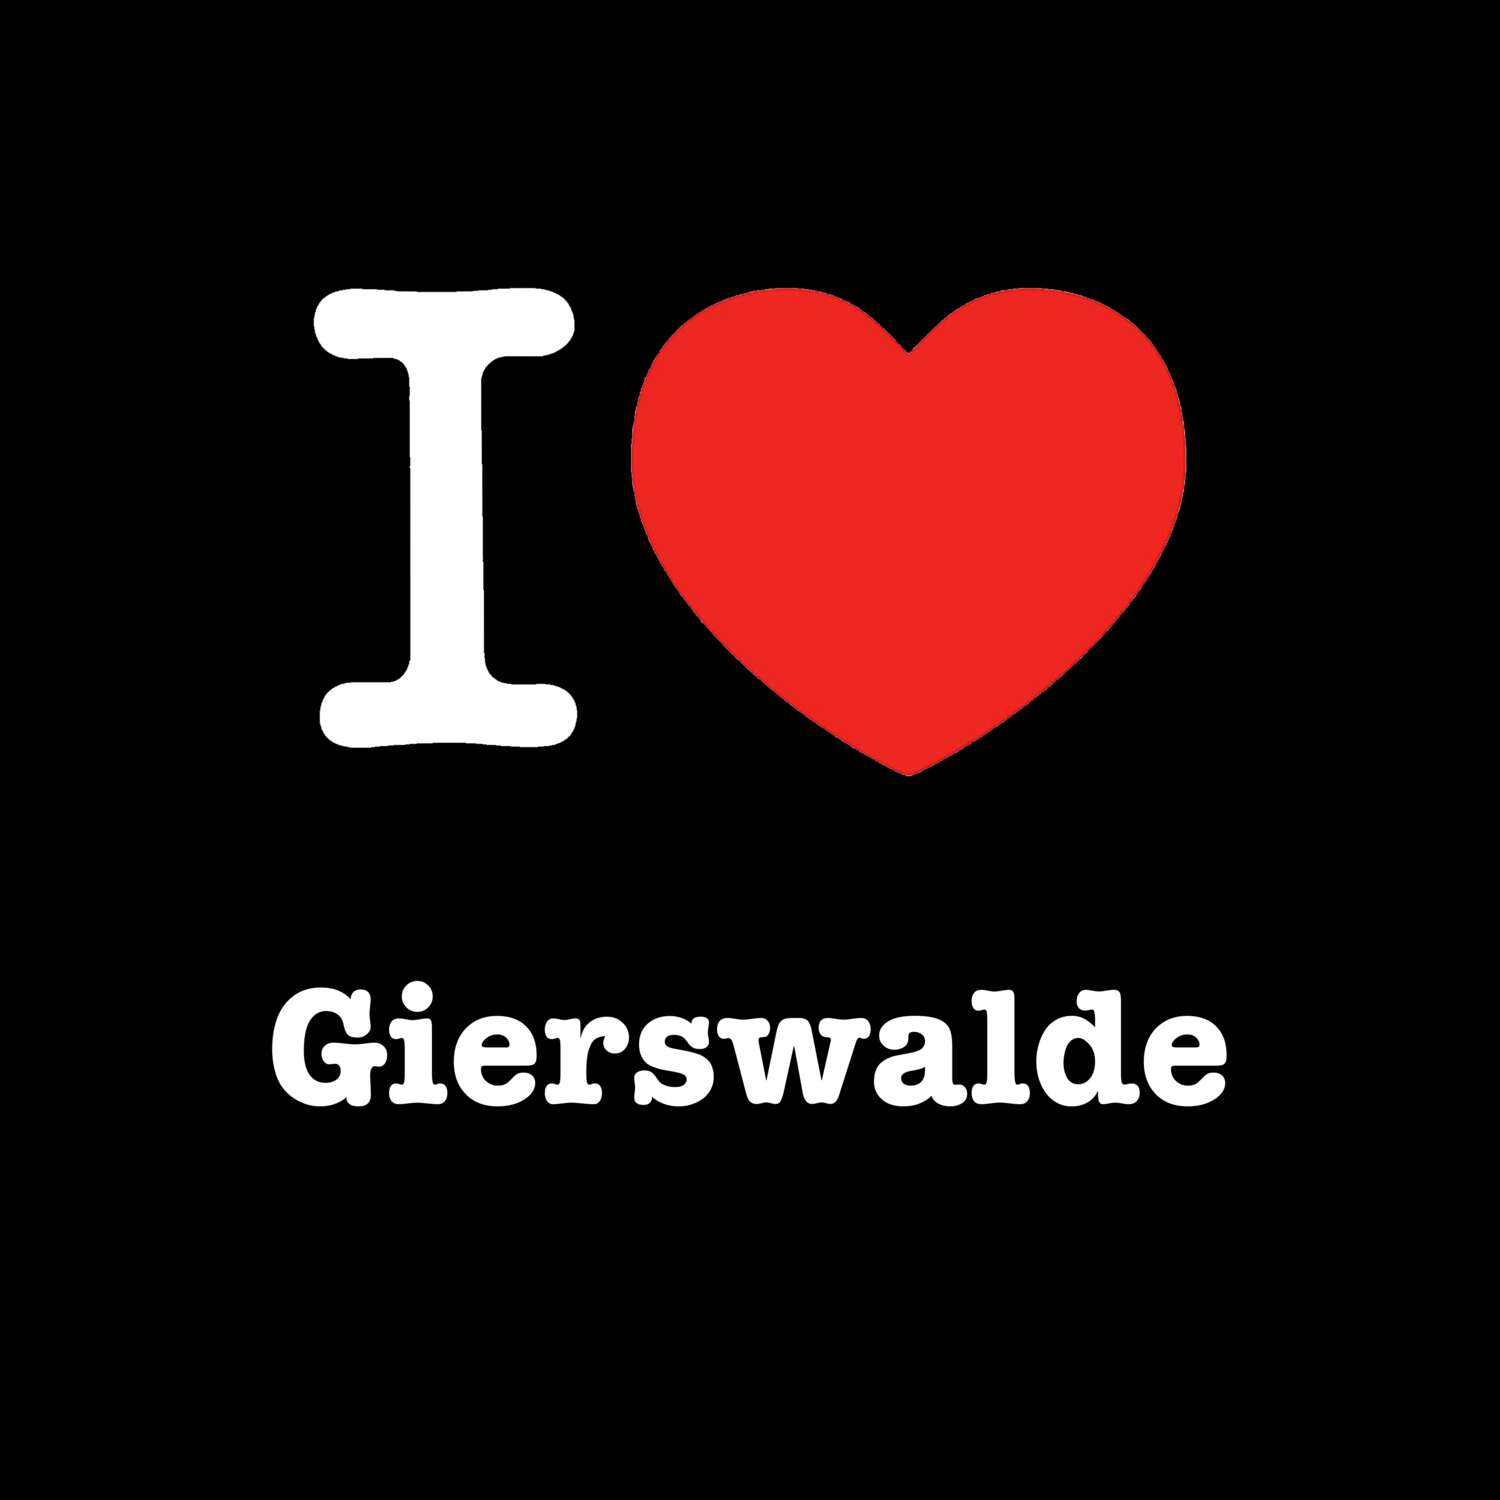 Gierswalde T-Shirt »I love«